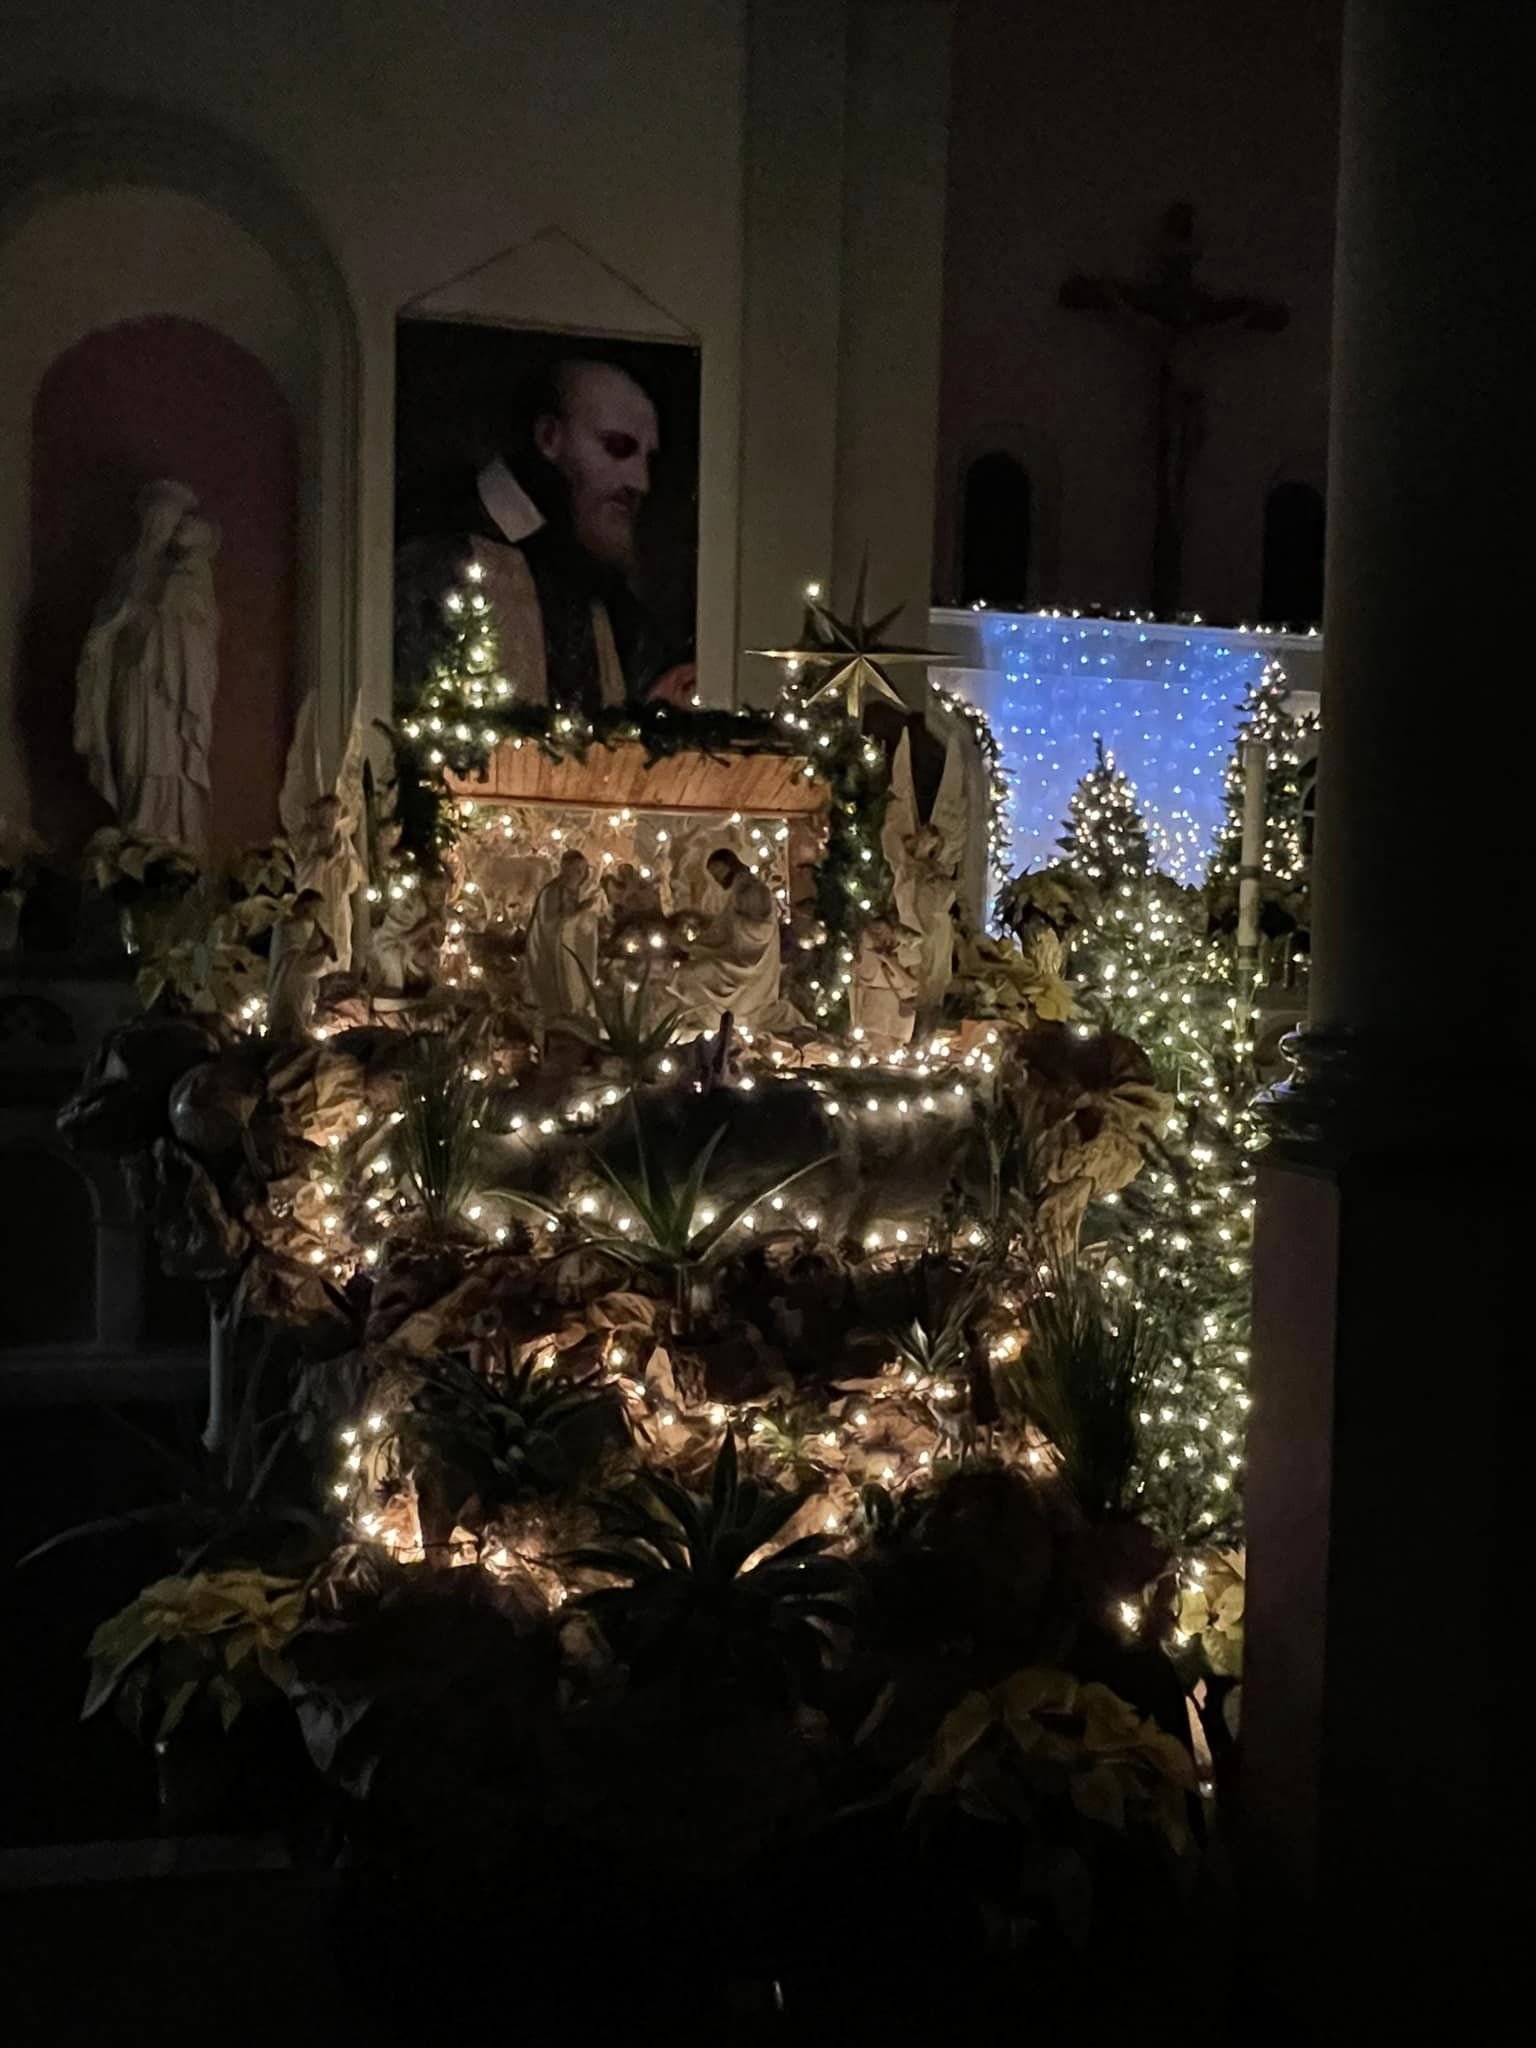  Holy Family Parish, Adrian, MI Christmas display          